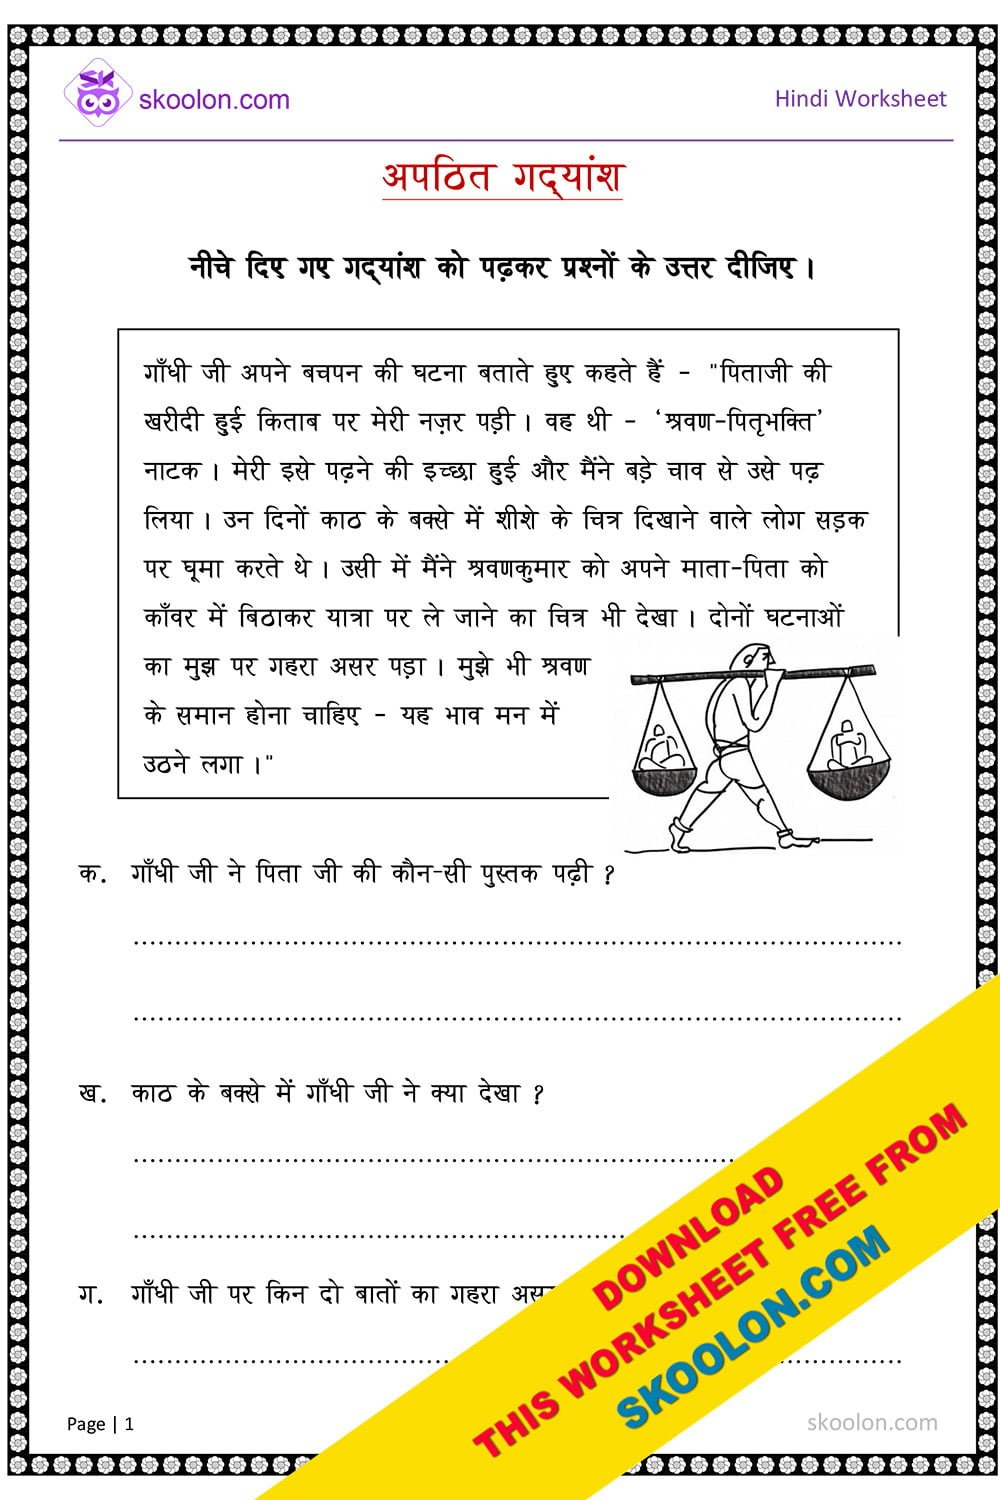 Apathit Gadyansh (श्रवण कुमार) - Skoolon throughout Free Printable Hindi Comprehension Worksheets for Grade 3